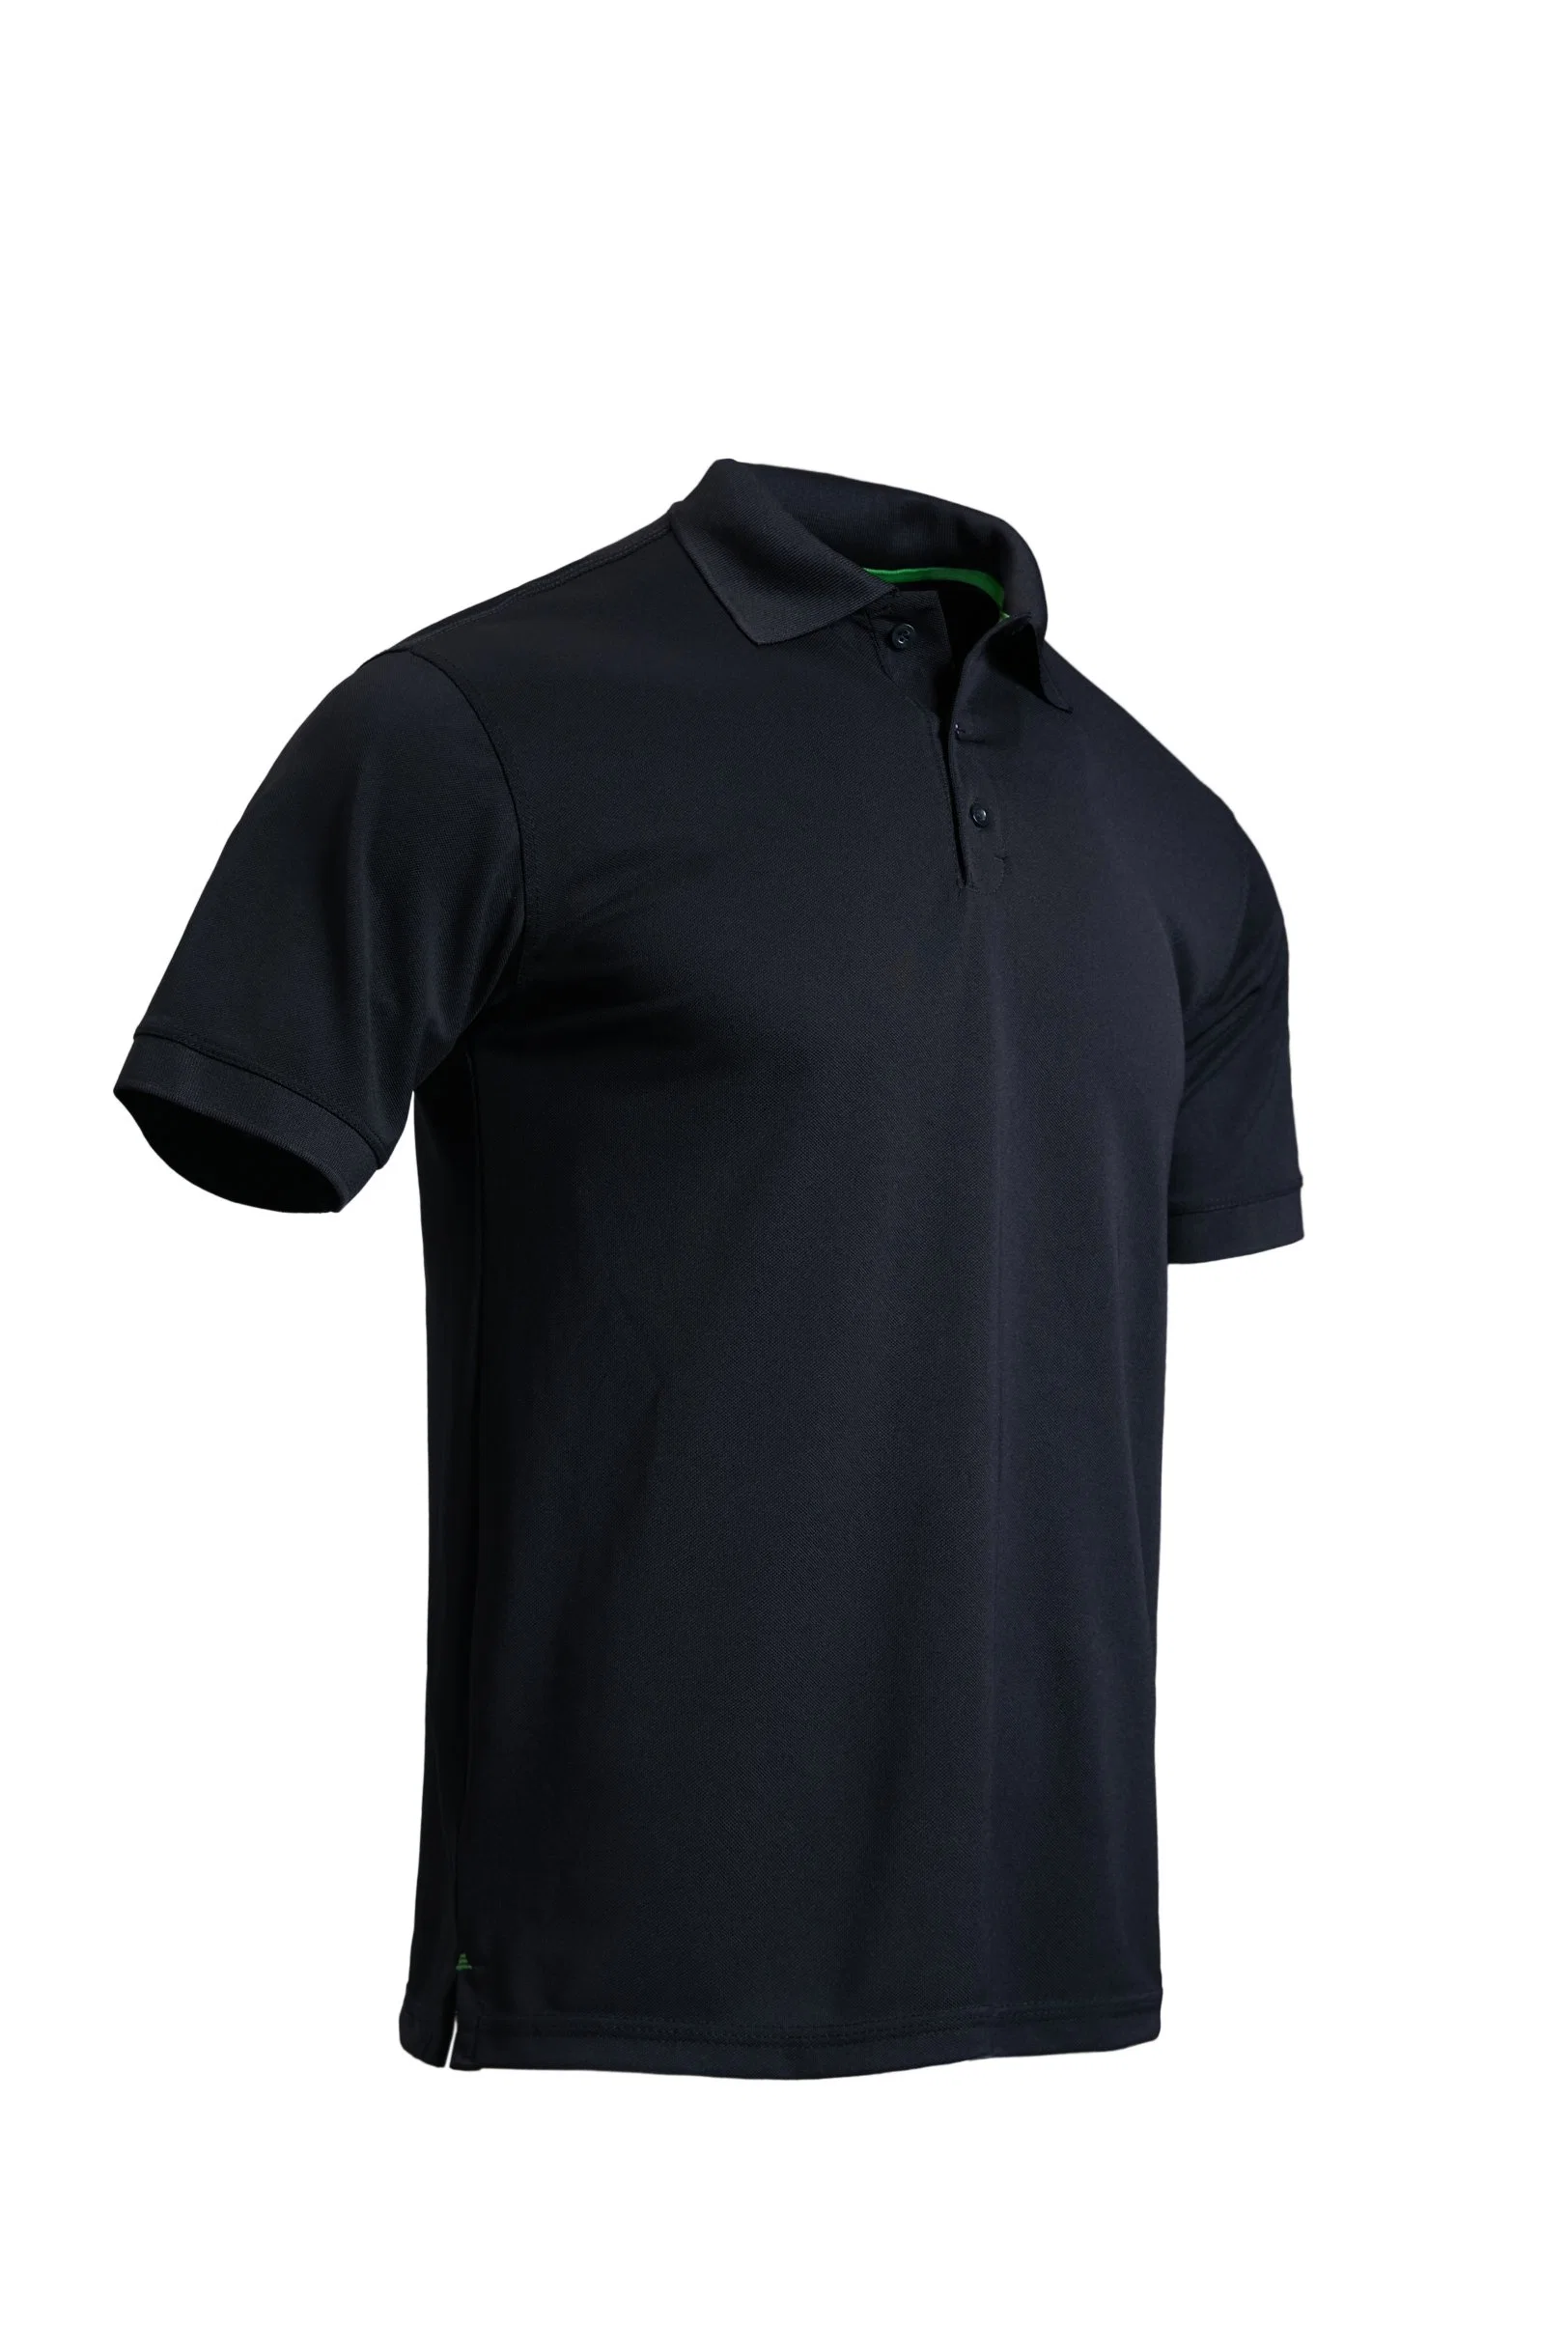 Men's Summer Solid Pique Breathable Sport Polo Shirt